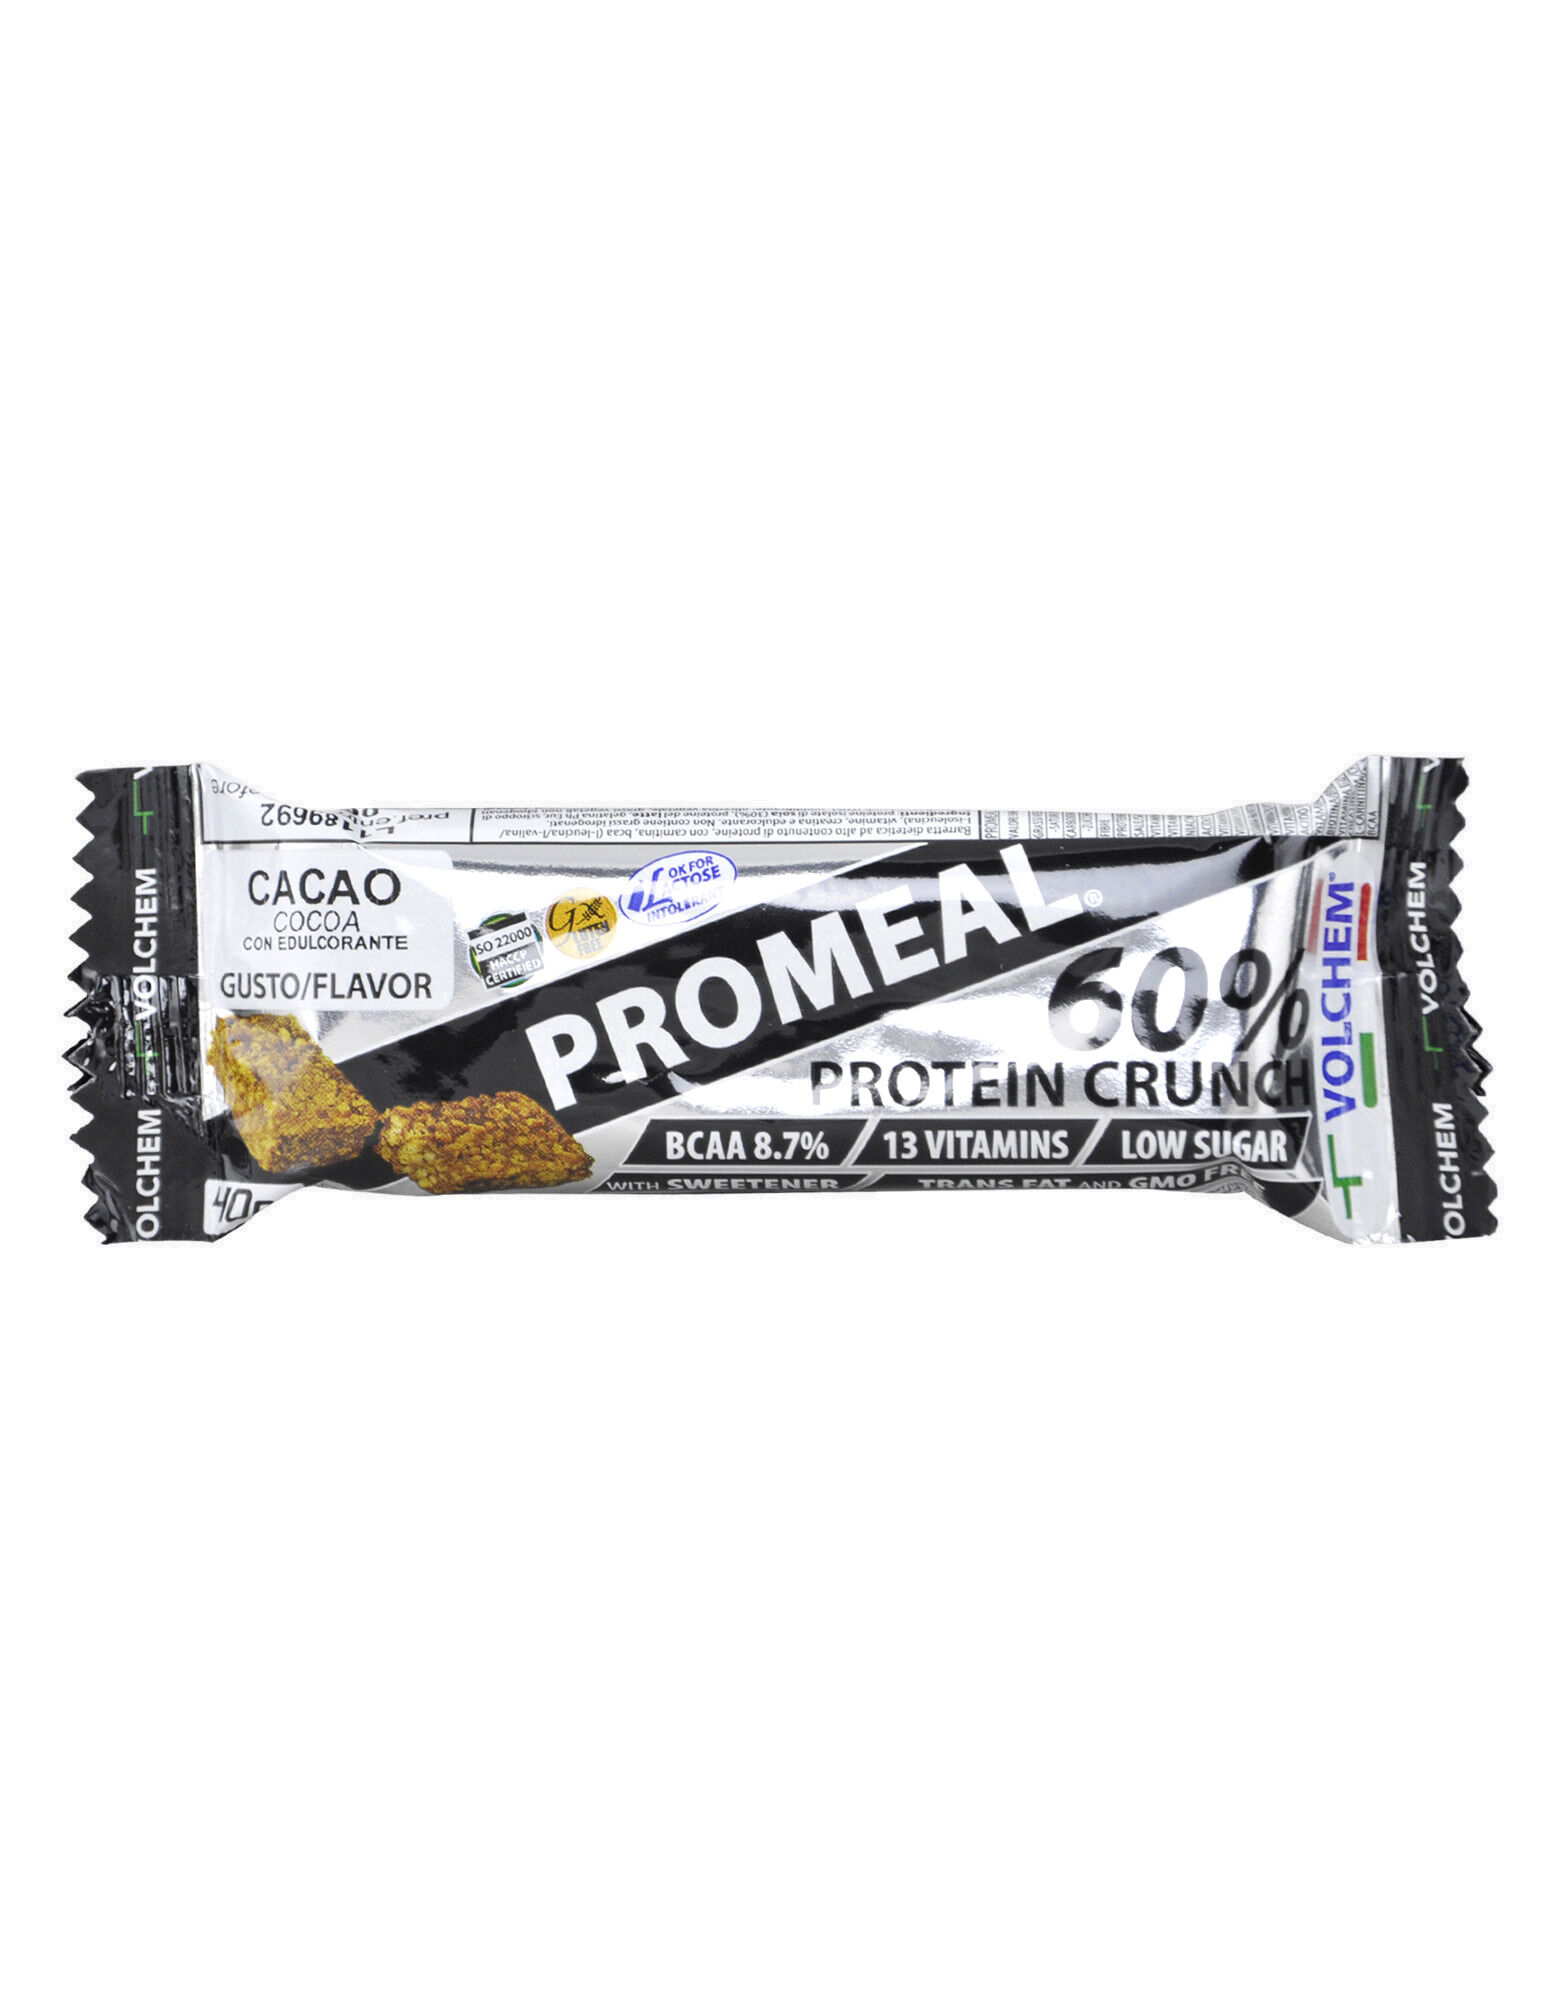 VOLCHEM Promeal Protein Crunch 60% 1 Barretta Da 40 Grammi Vaniglia